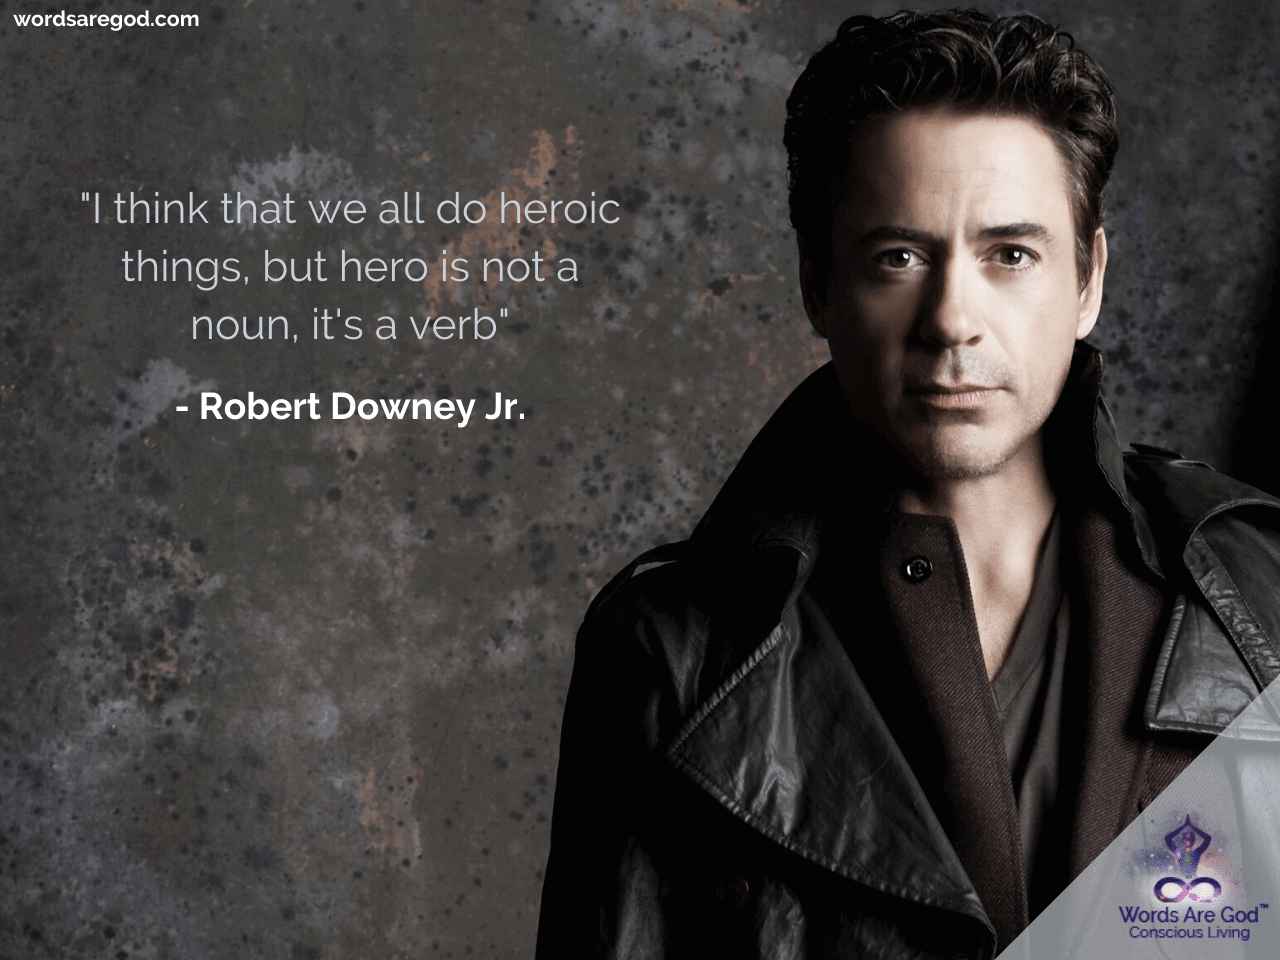 Robert Downey Jr. Inspirational Quote by Robert Downey Jr.